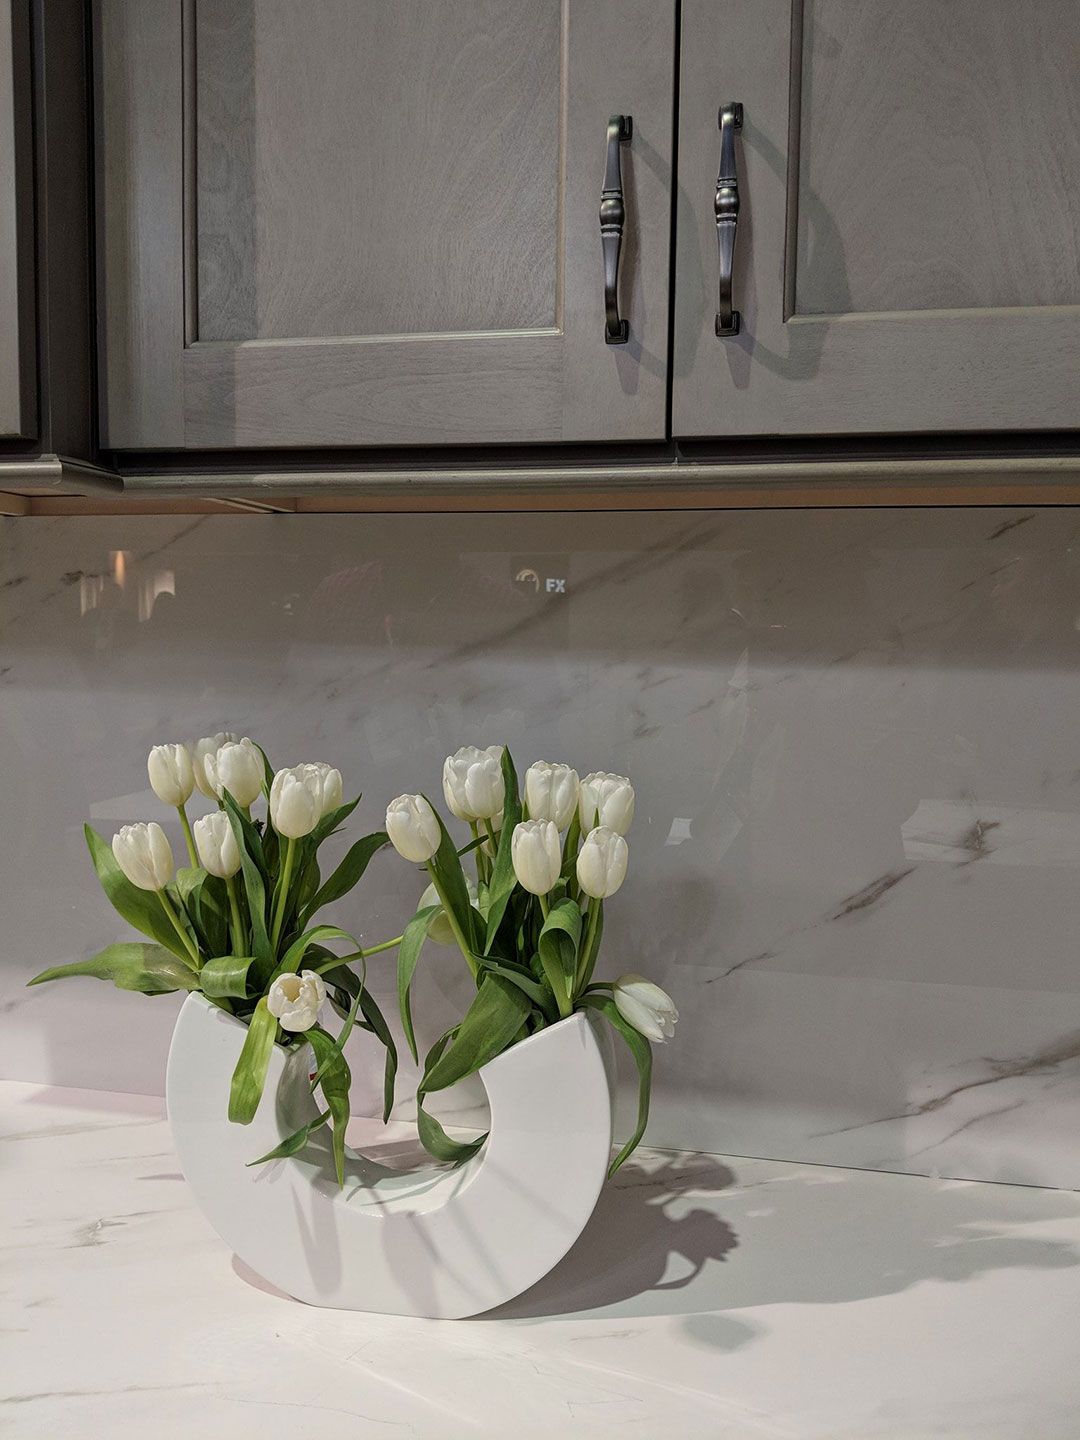 kitchen counter with flower vase